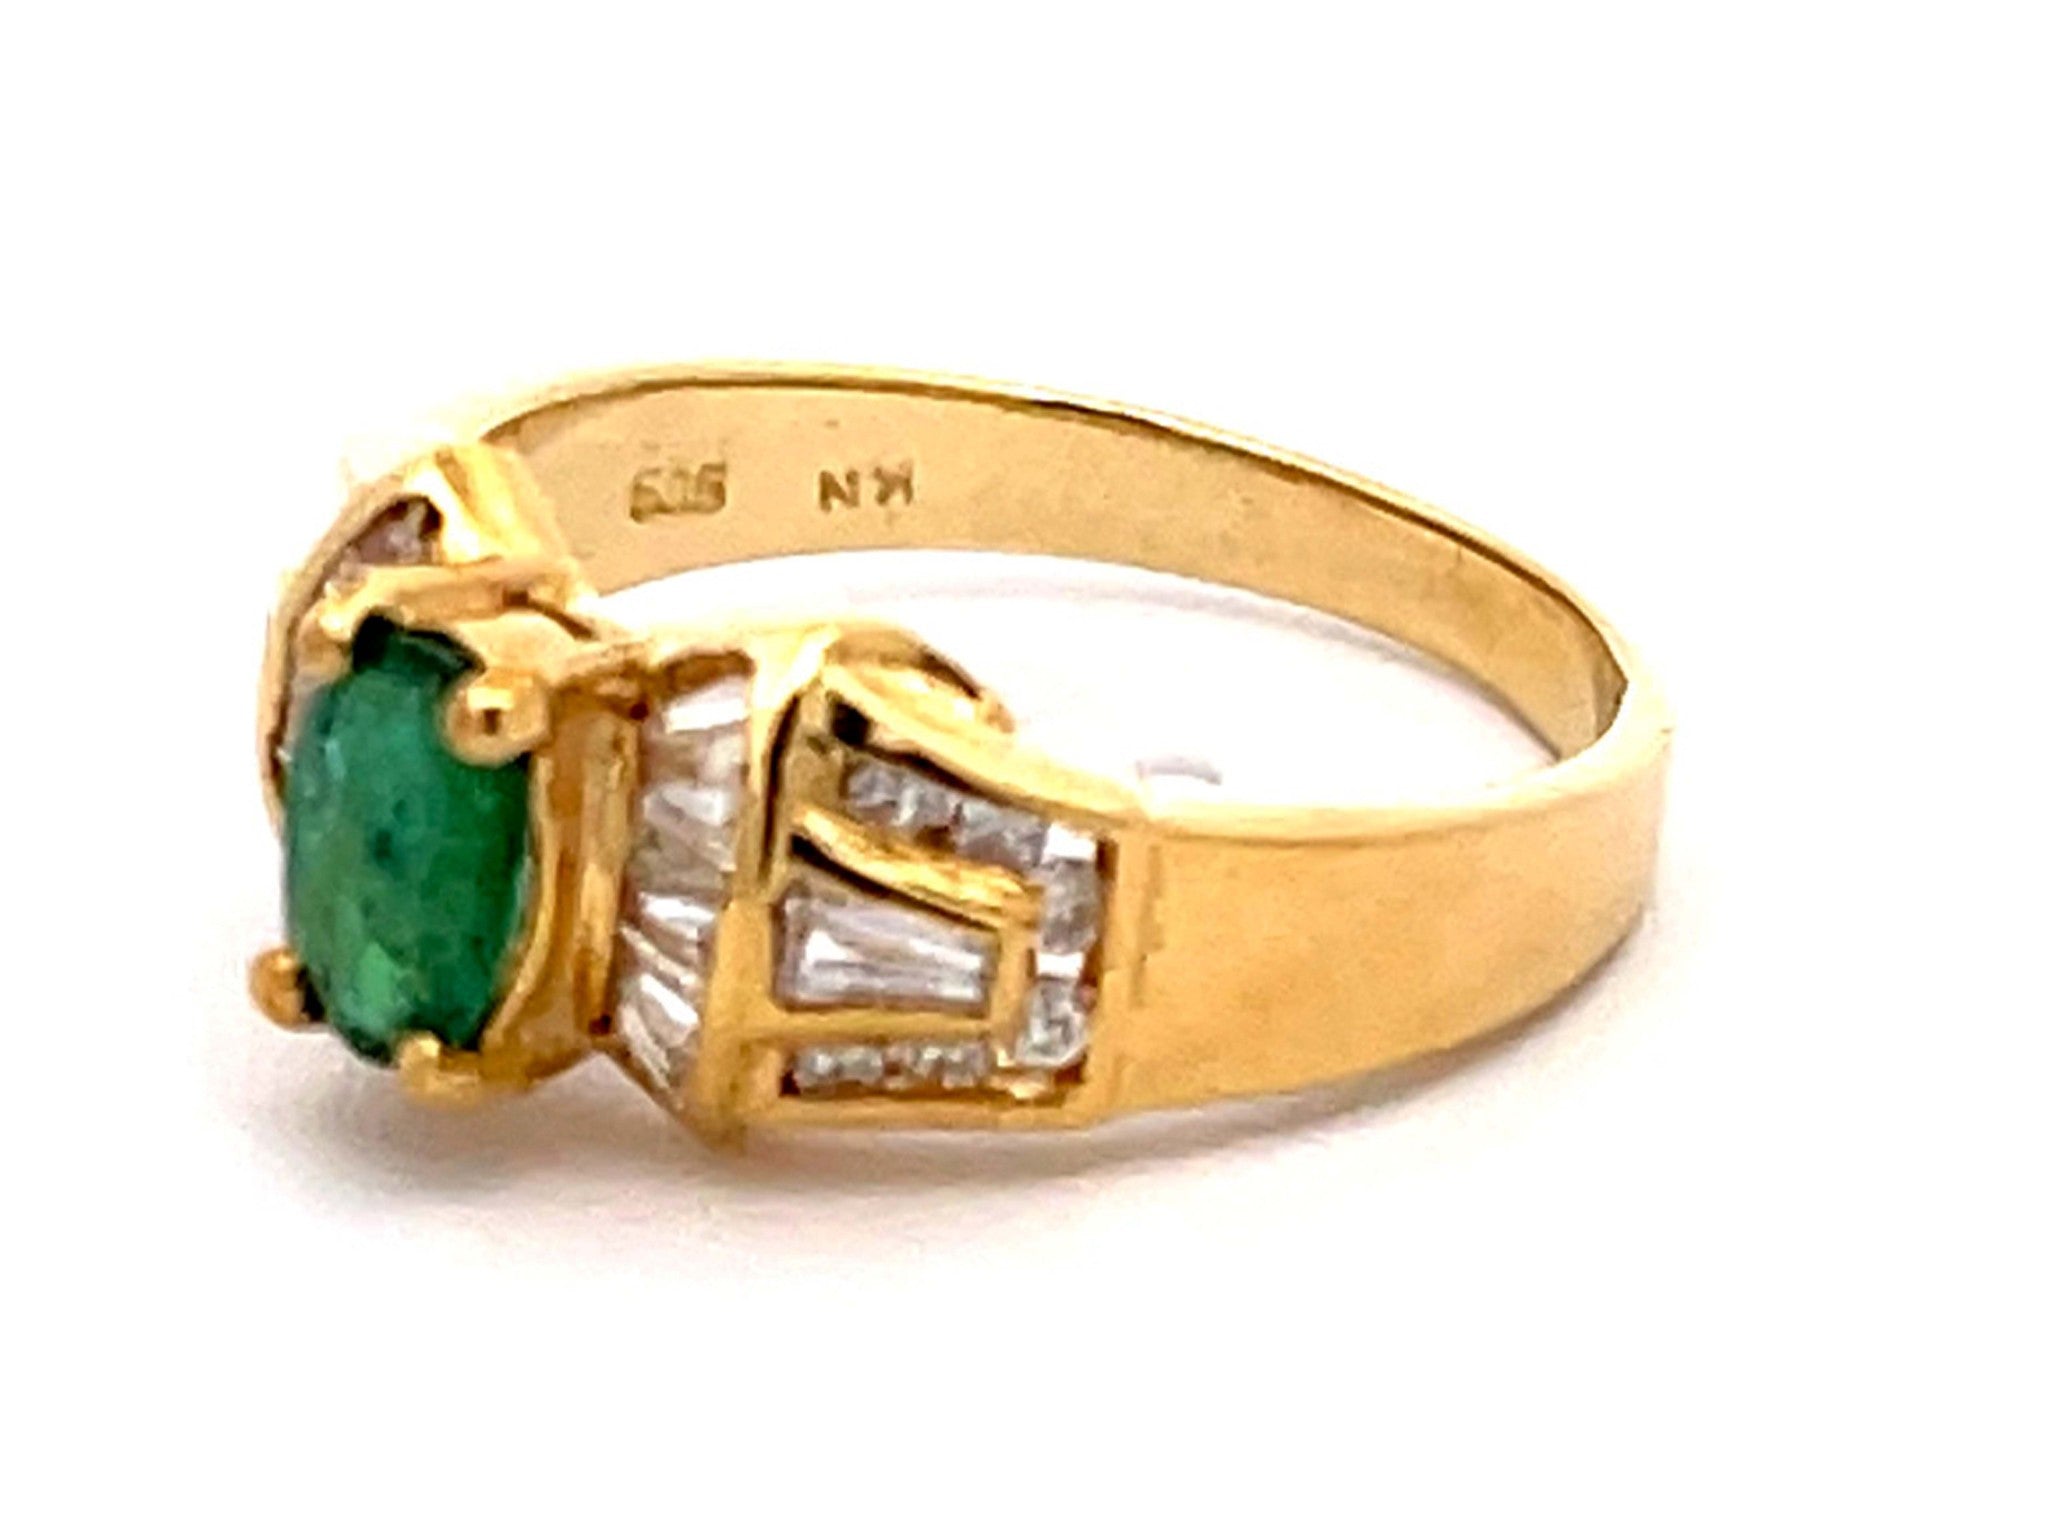 Vintage Green Emerald Diamond Ring in 14k Yellow Gold